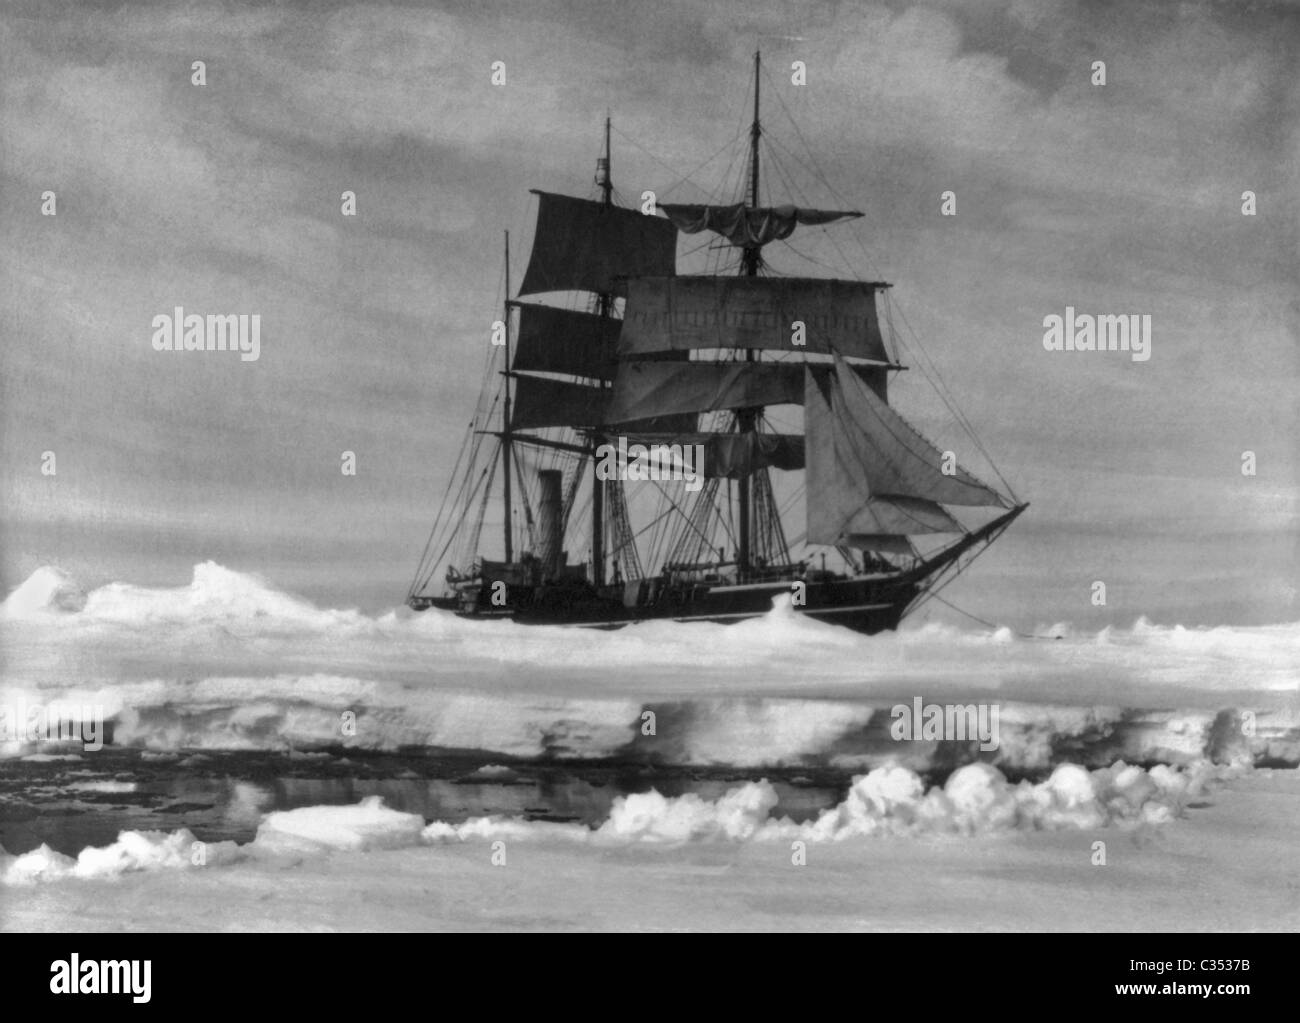 Robert Falcon Scott's ship 'Terra Nova' stuck in heavy pack ice in Antarctica during the Terra Nova Expedition of 1910 - 1913. Stock Photo